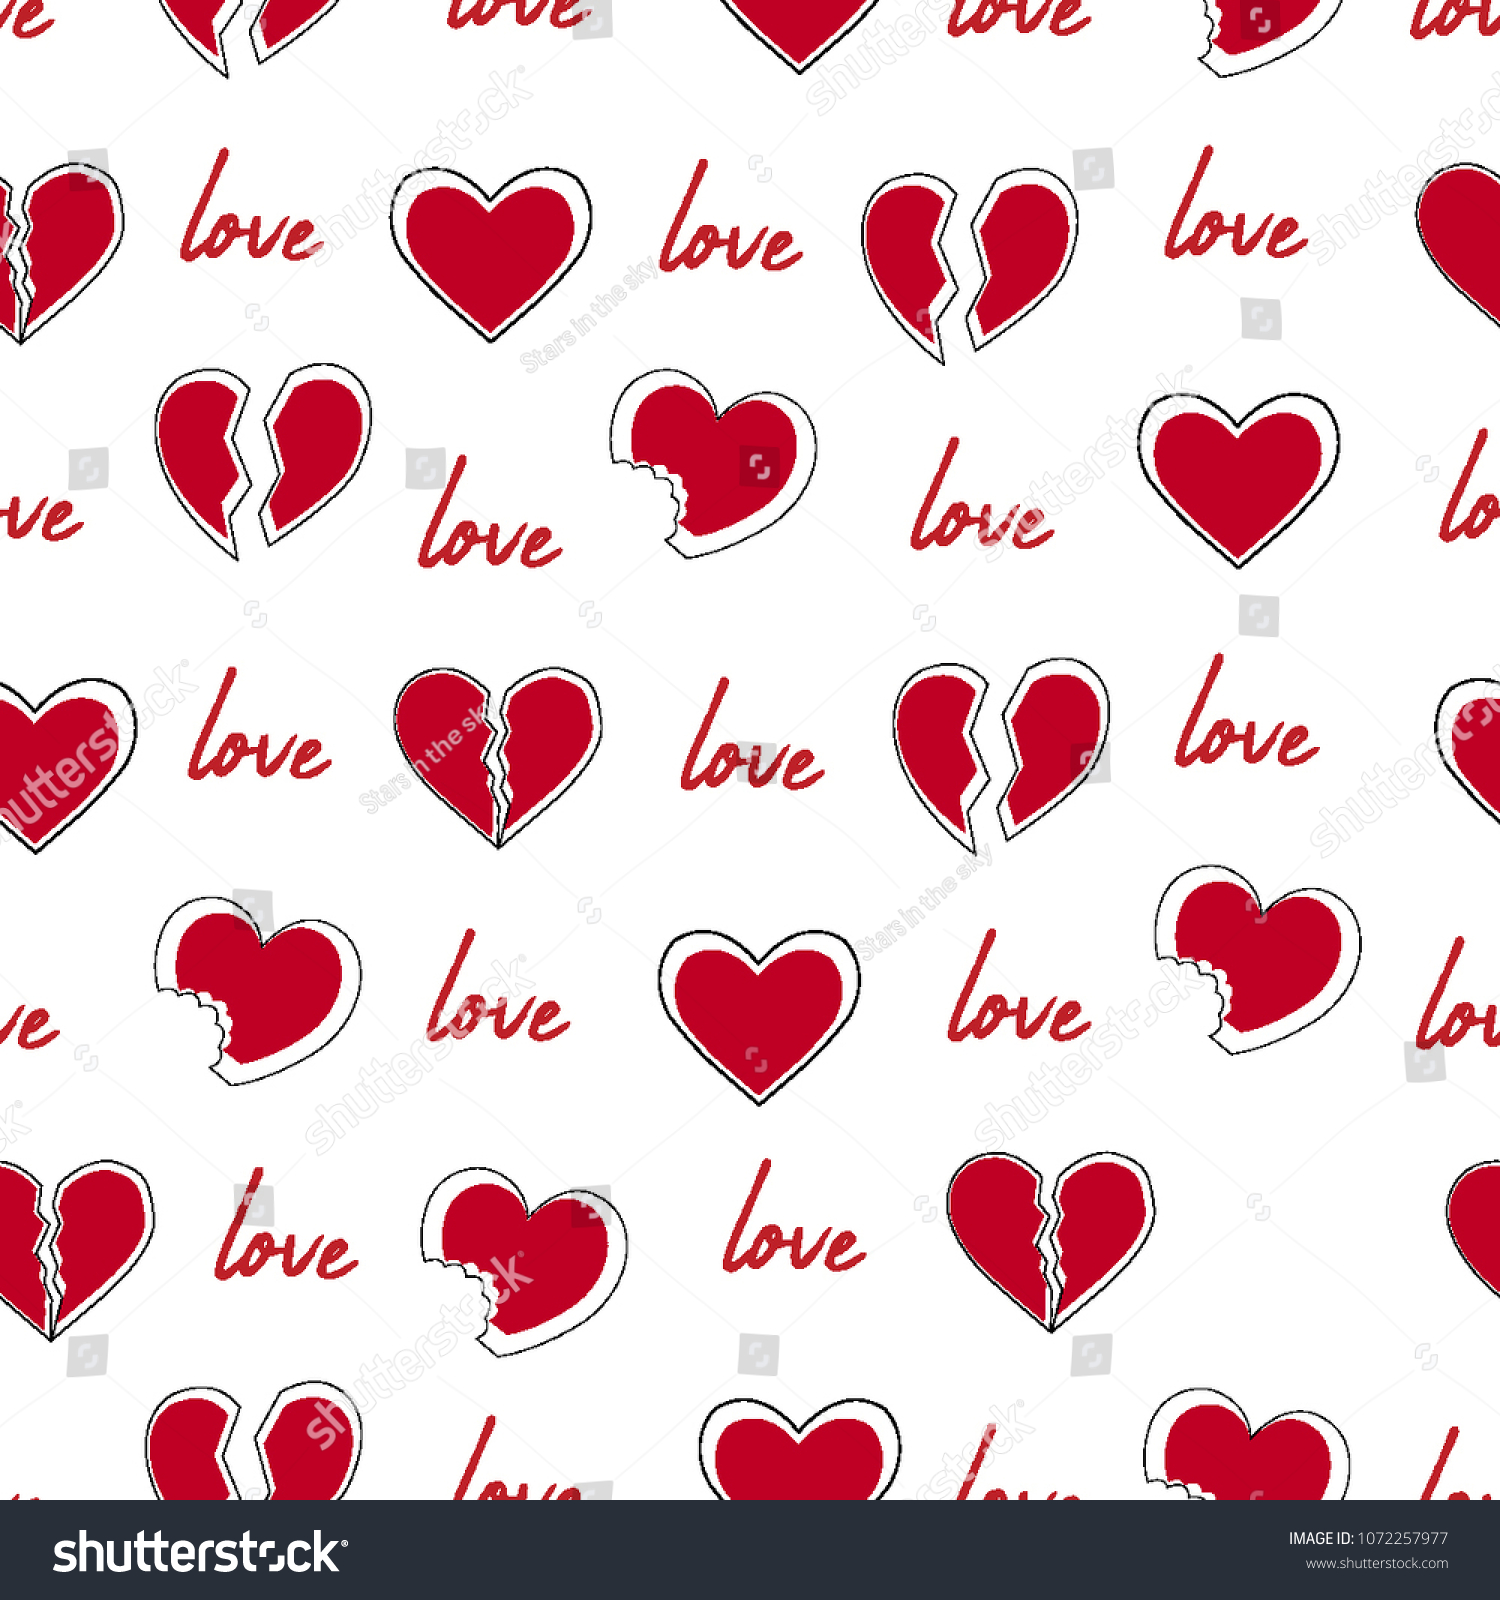 Red Heart Love Black Line Art Stock Vector Royalty Free 1072257977 Shutterstock 1821